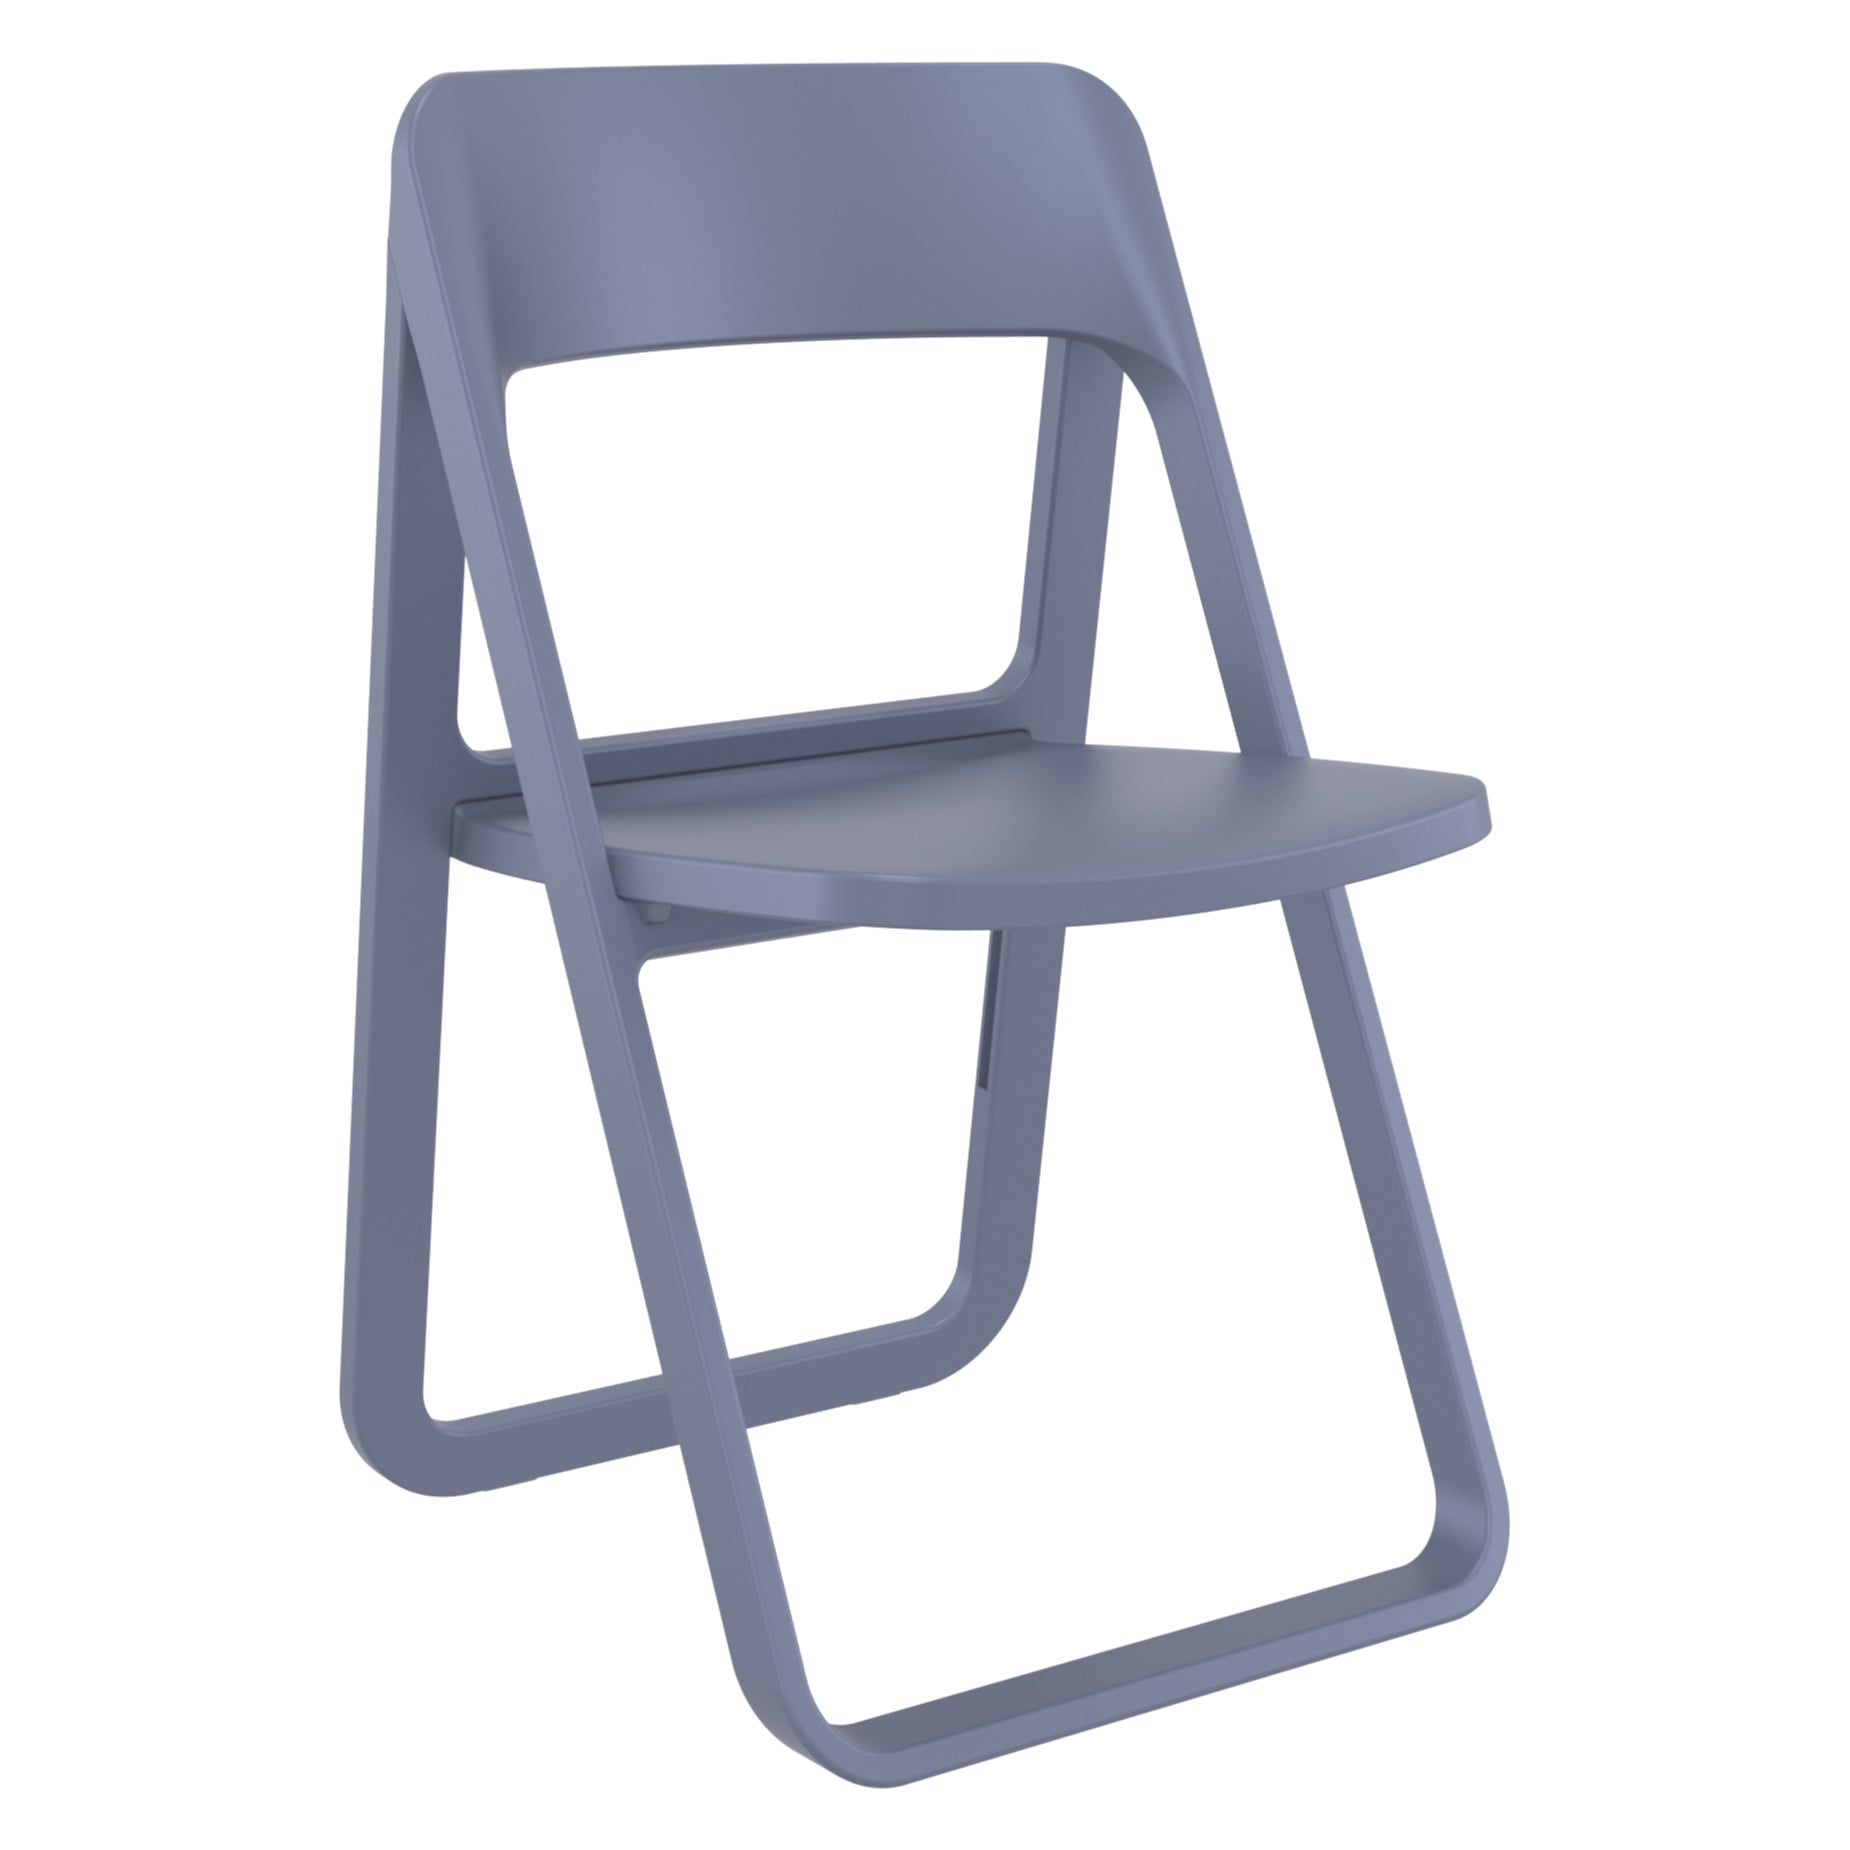 Isp079-dgr Dream Folding Outdoor Chair, Dark Grey